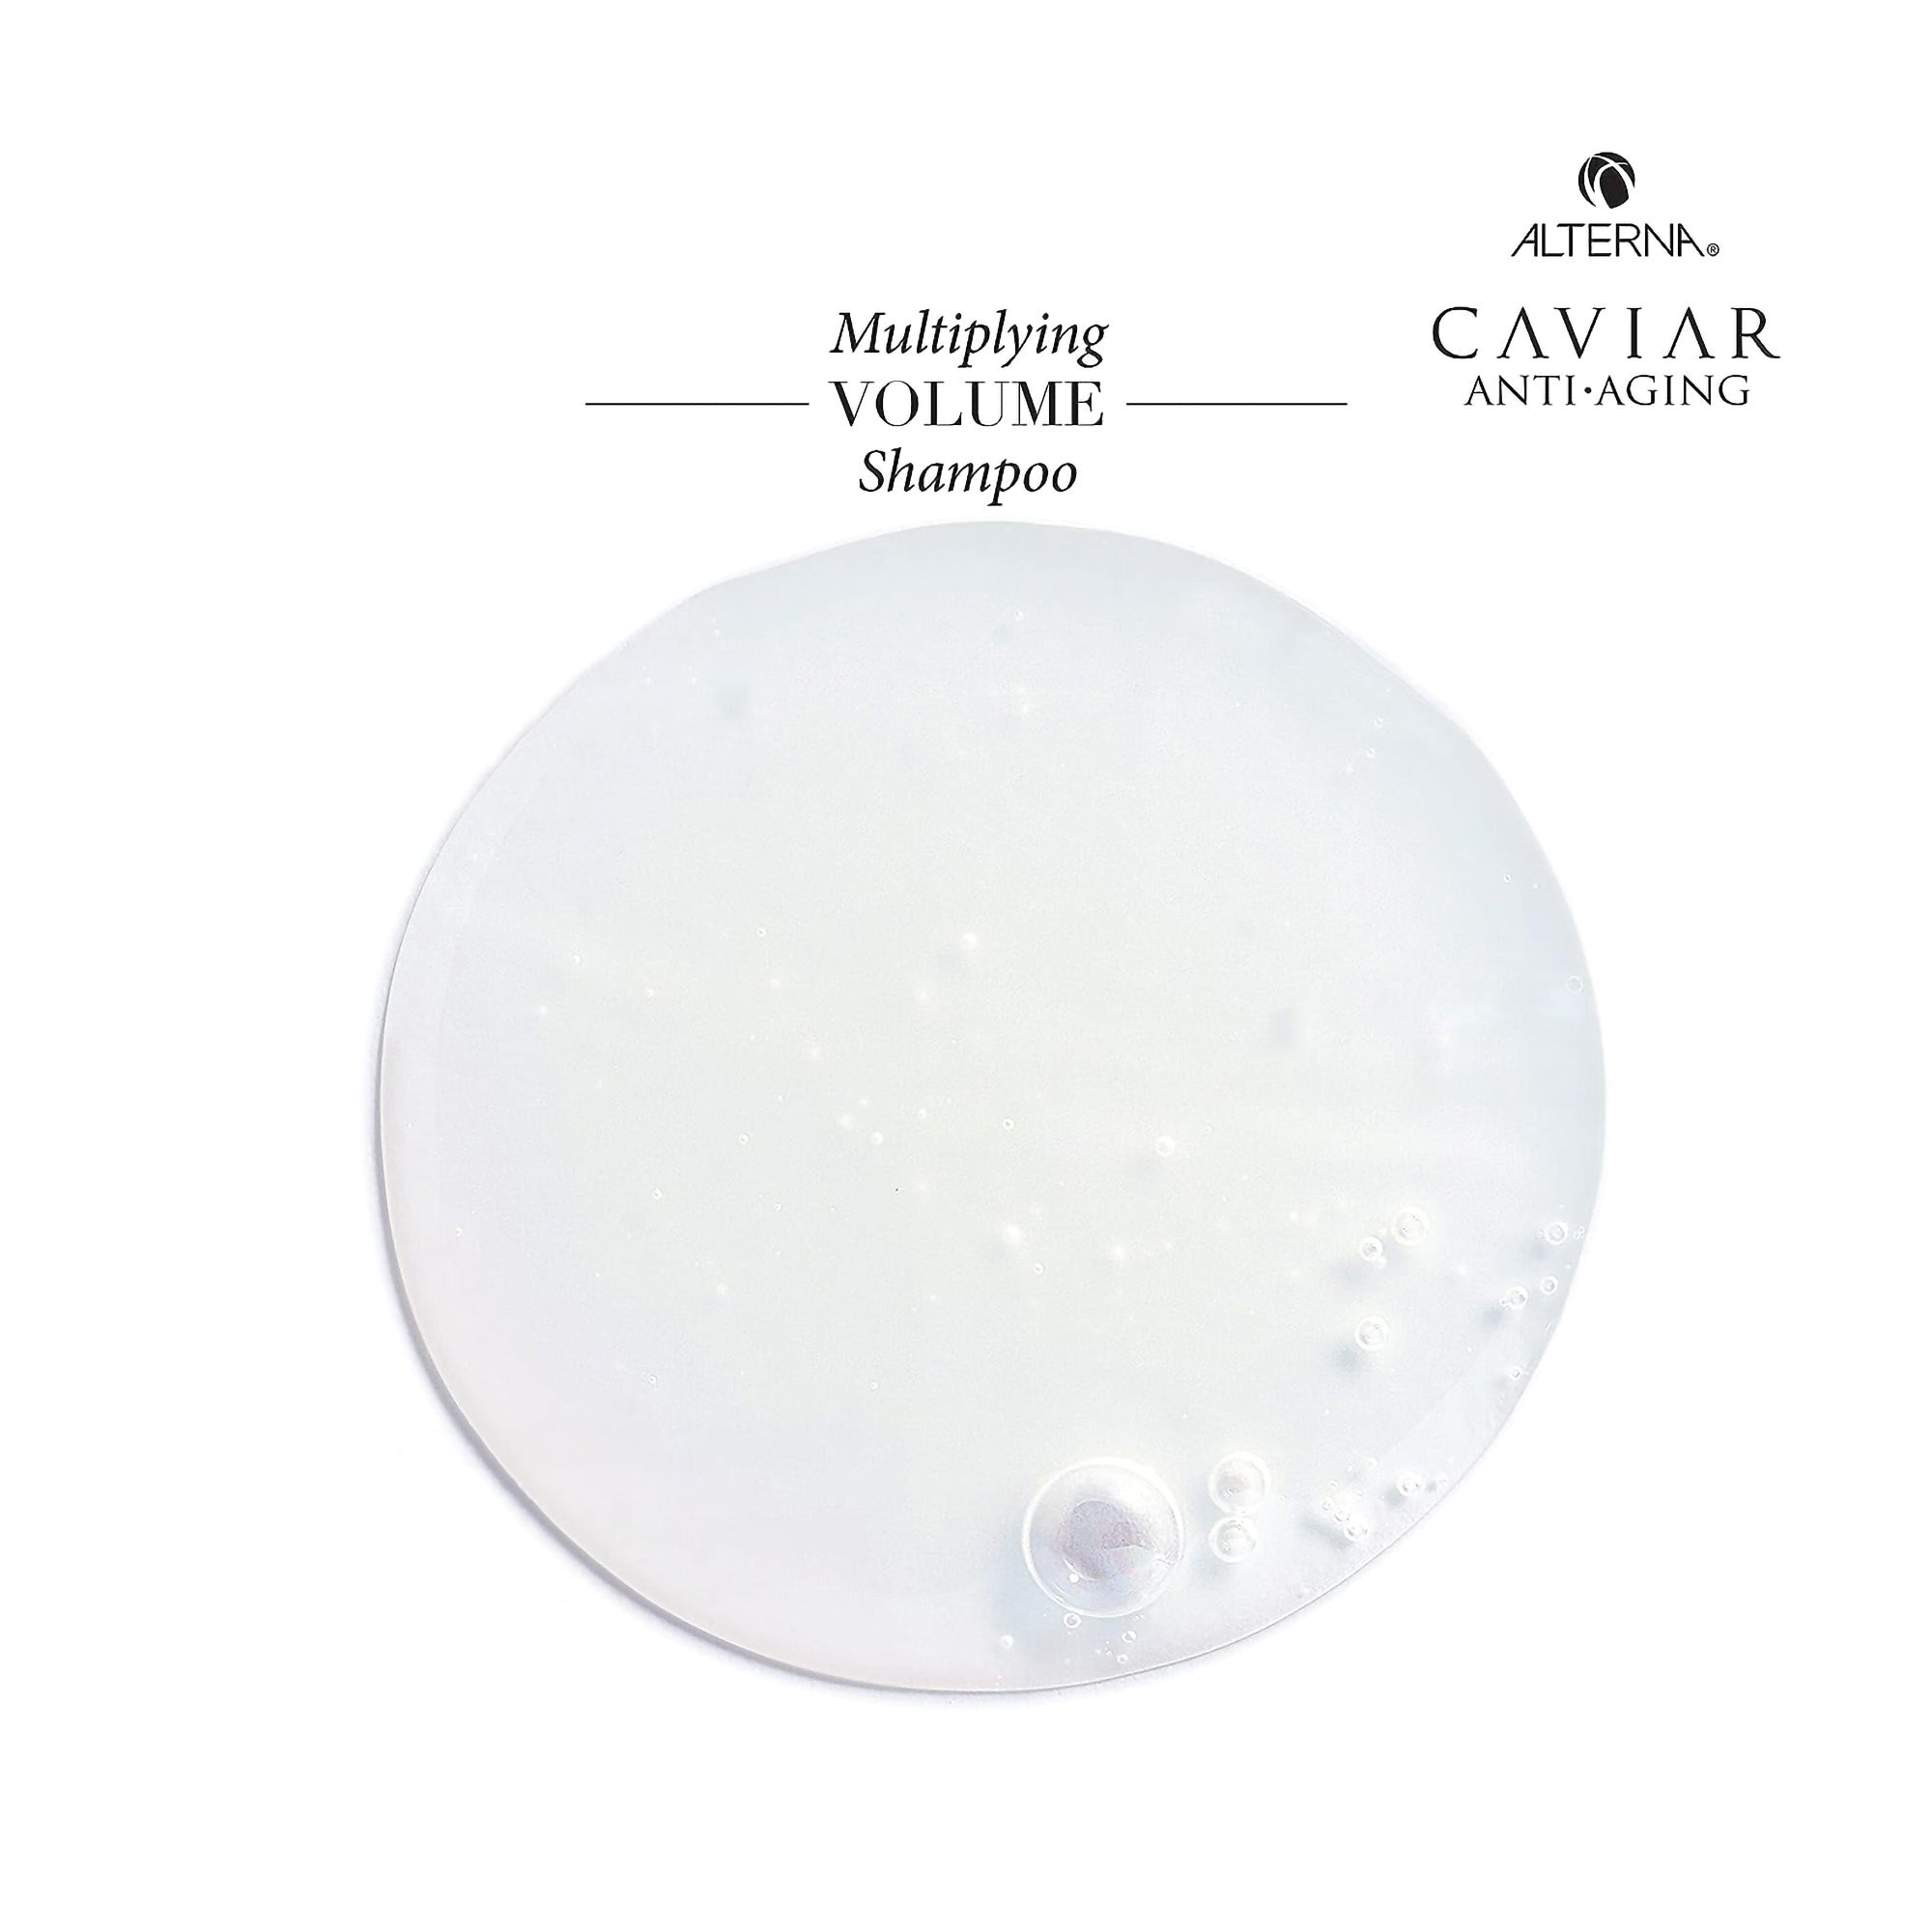 Alterna Caviar Anti-Aging Multiplying Volume Shampoo / 16.5OZ